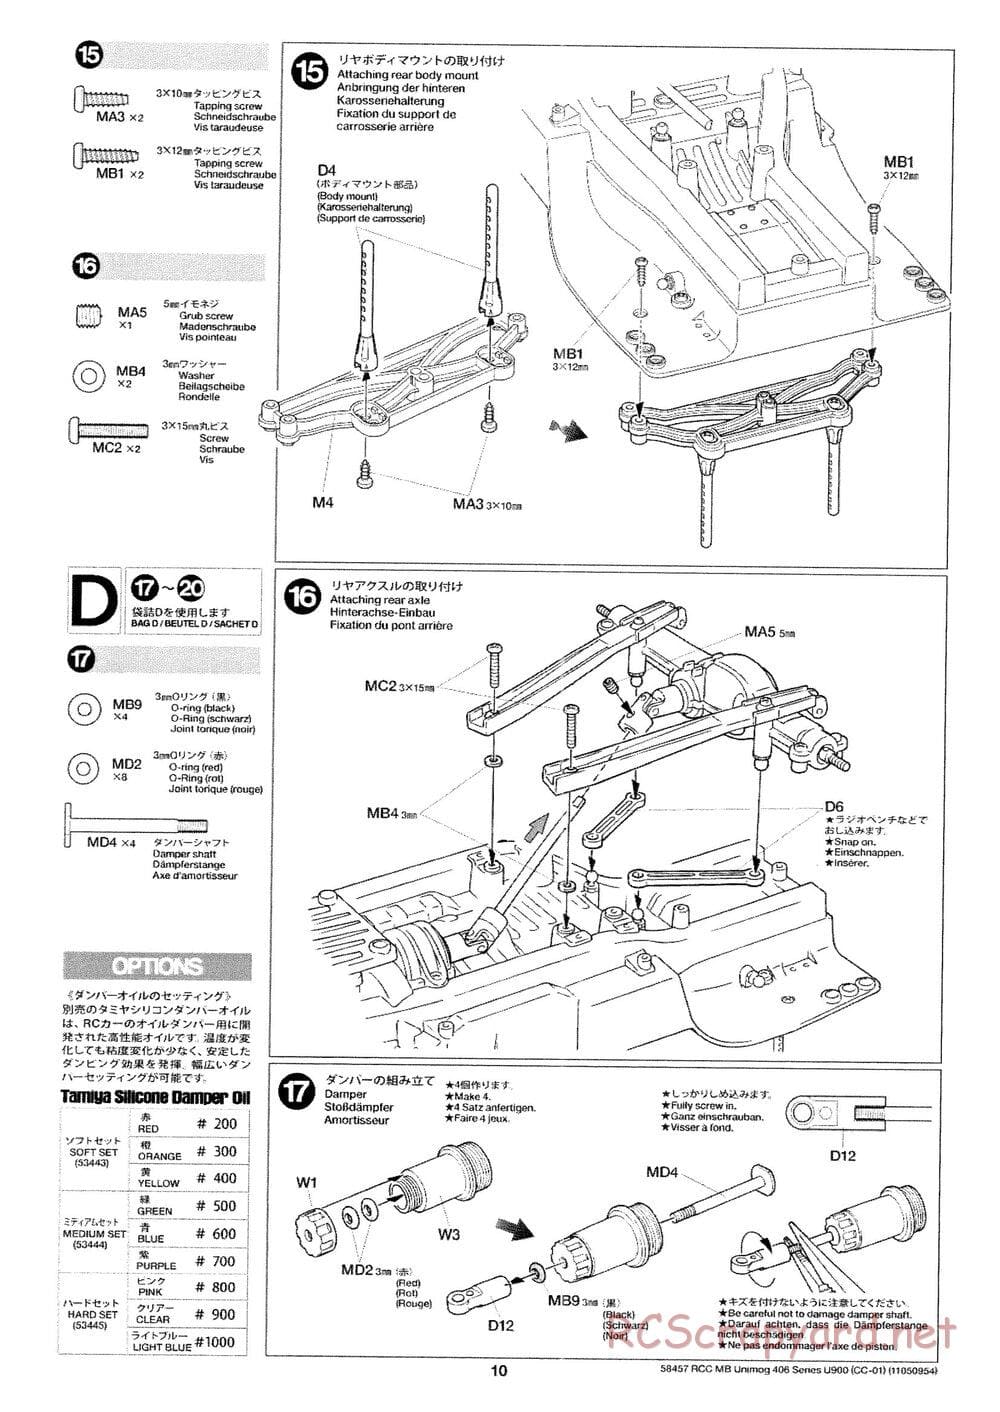 Tamiya - Mercedes-Benz Unimog 406 Series U900 - CC-01 Chassis - Manual - Page 10